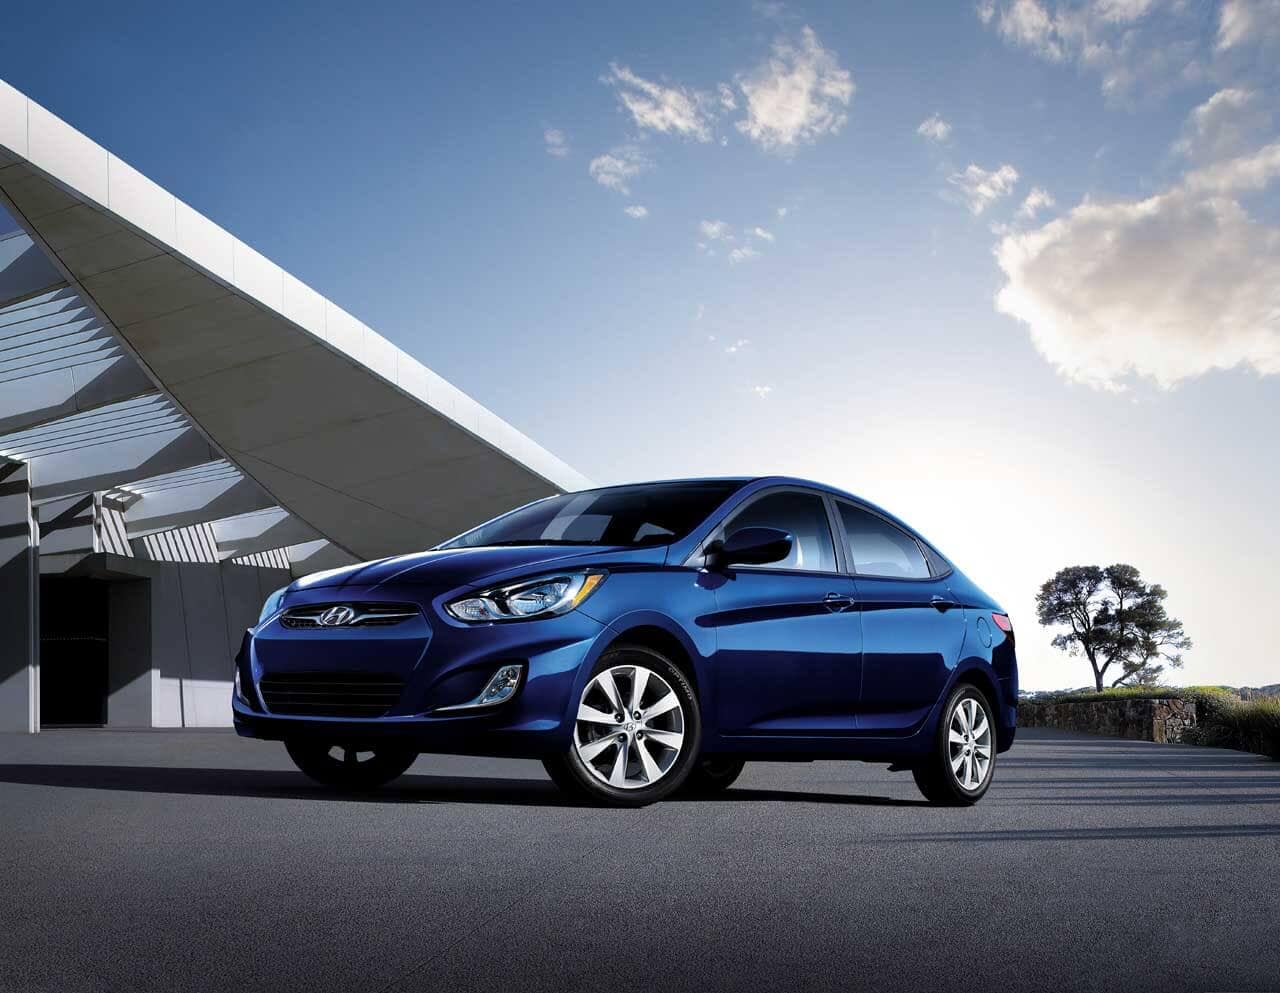 The 2013 Hyundai Accent